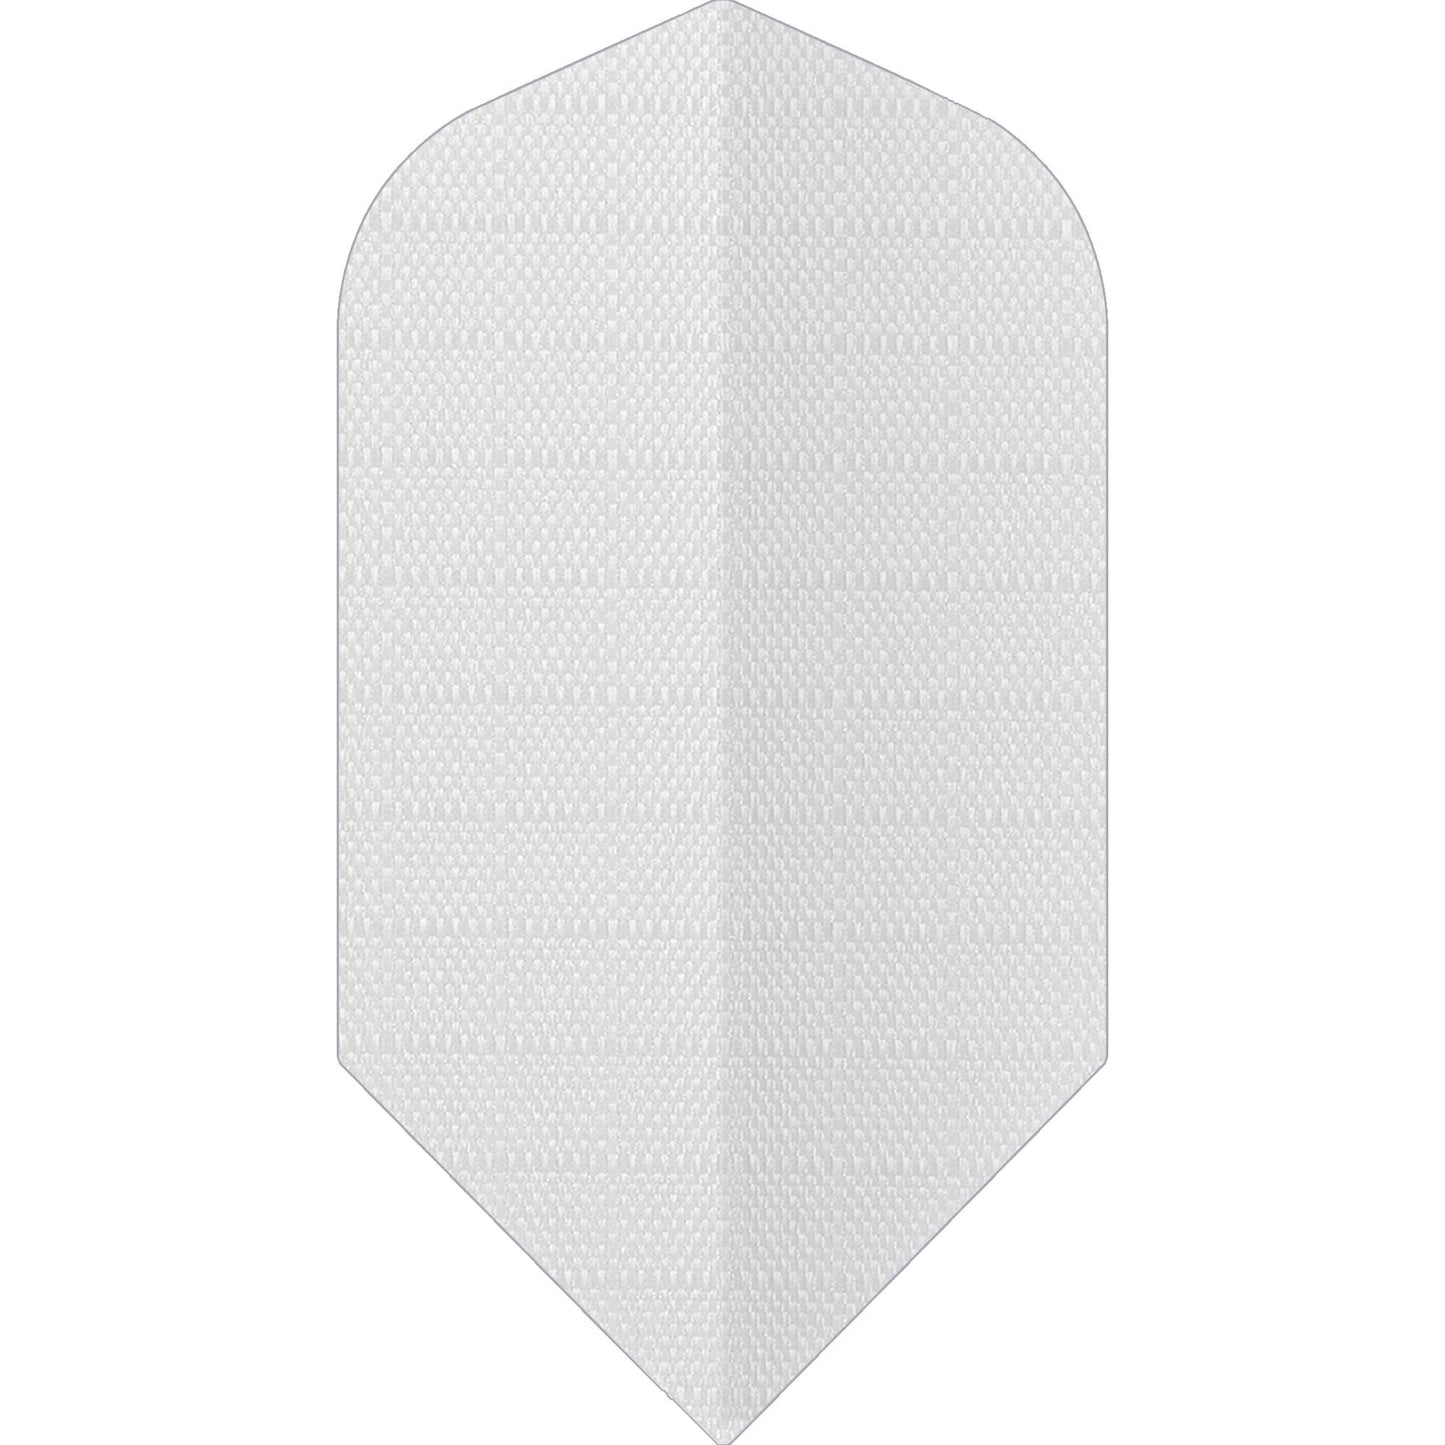 *Designa Dart Flights - Fabric Rip Stop Nylon - Longlife - Slim White